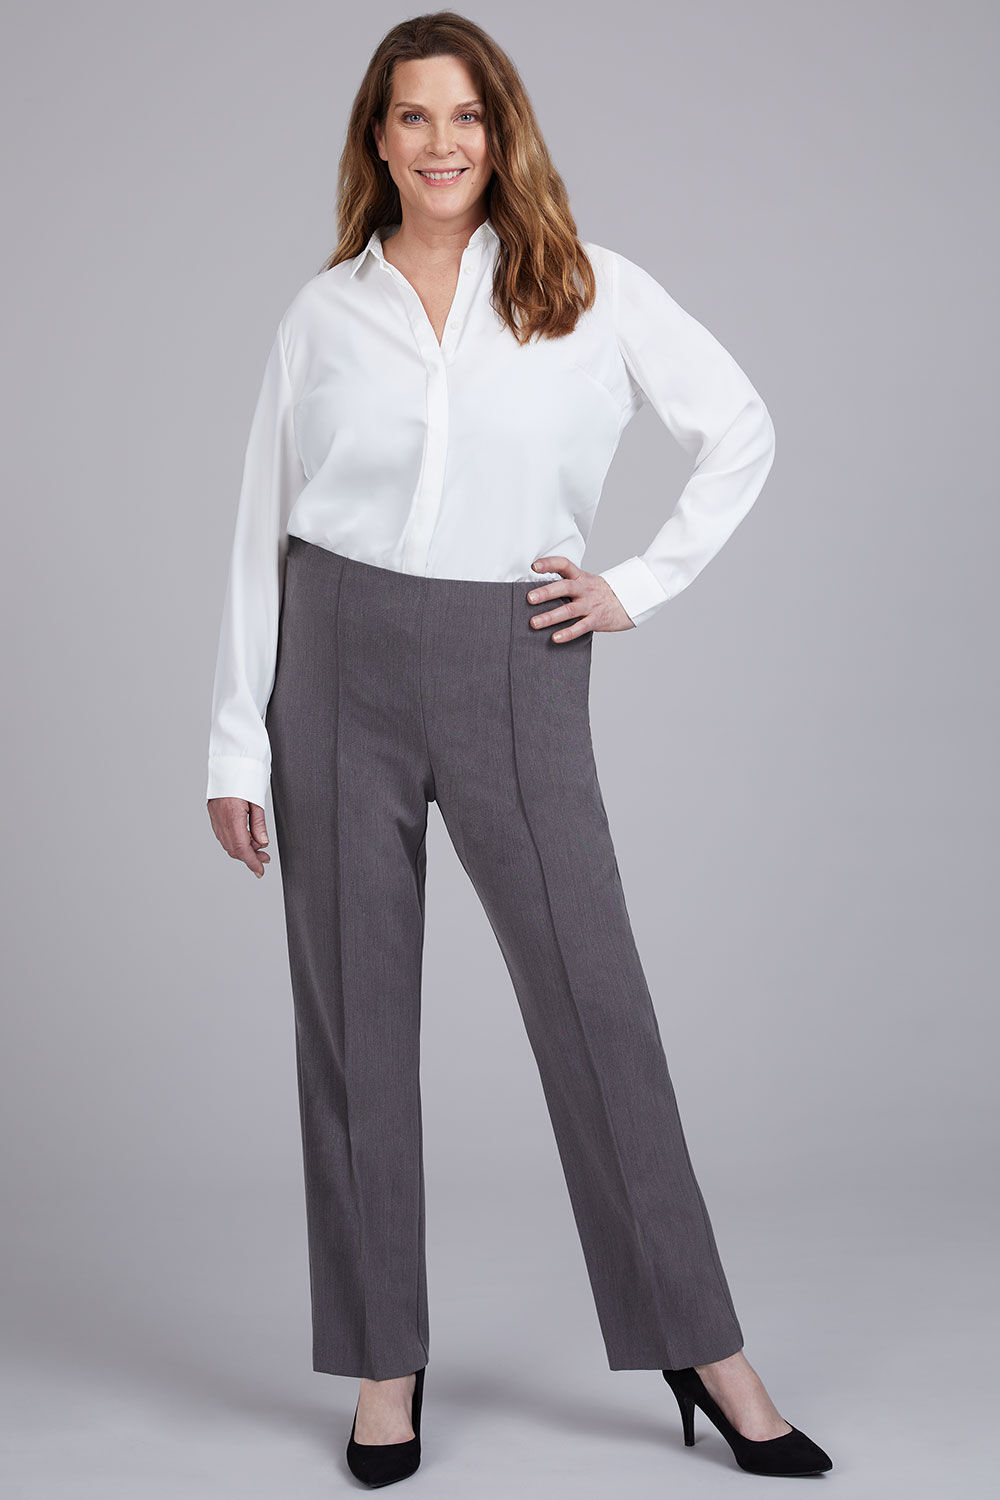 Women's Grey Skinny Trousers Ladies Smart Slim Leg Stretch Formal Pants  Work Office Girls School Day (4) : Amazon.co.uk: Fashion